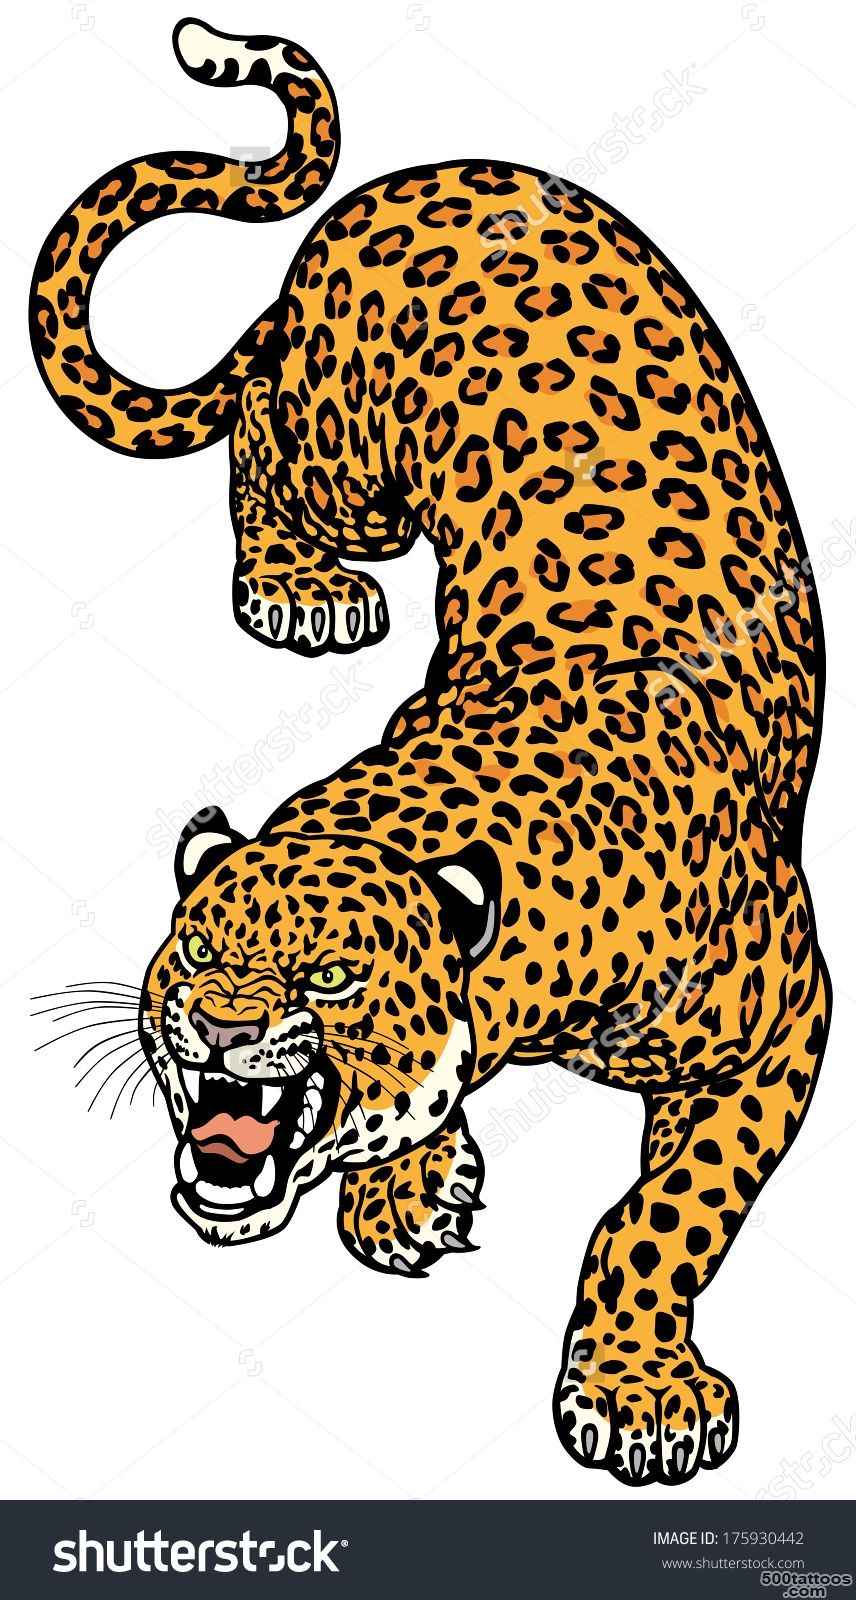 Leopard Tattoo Illustration Isolated On White Background ..._22